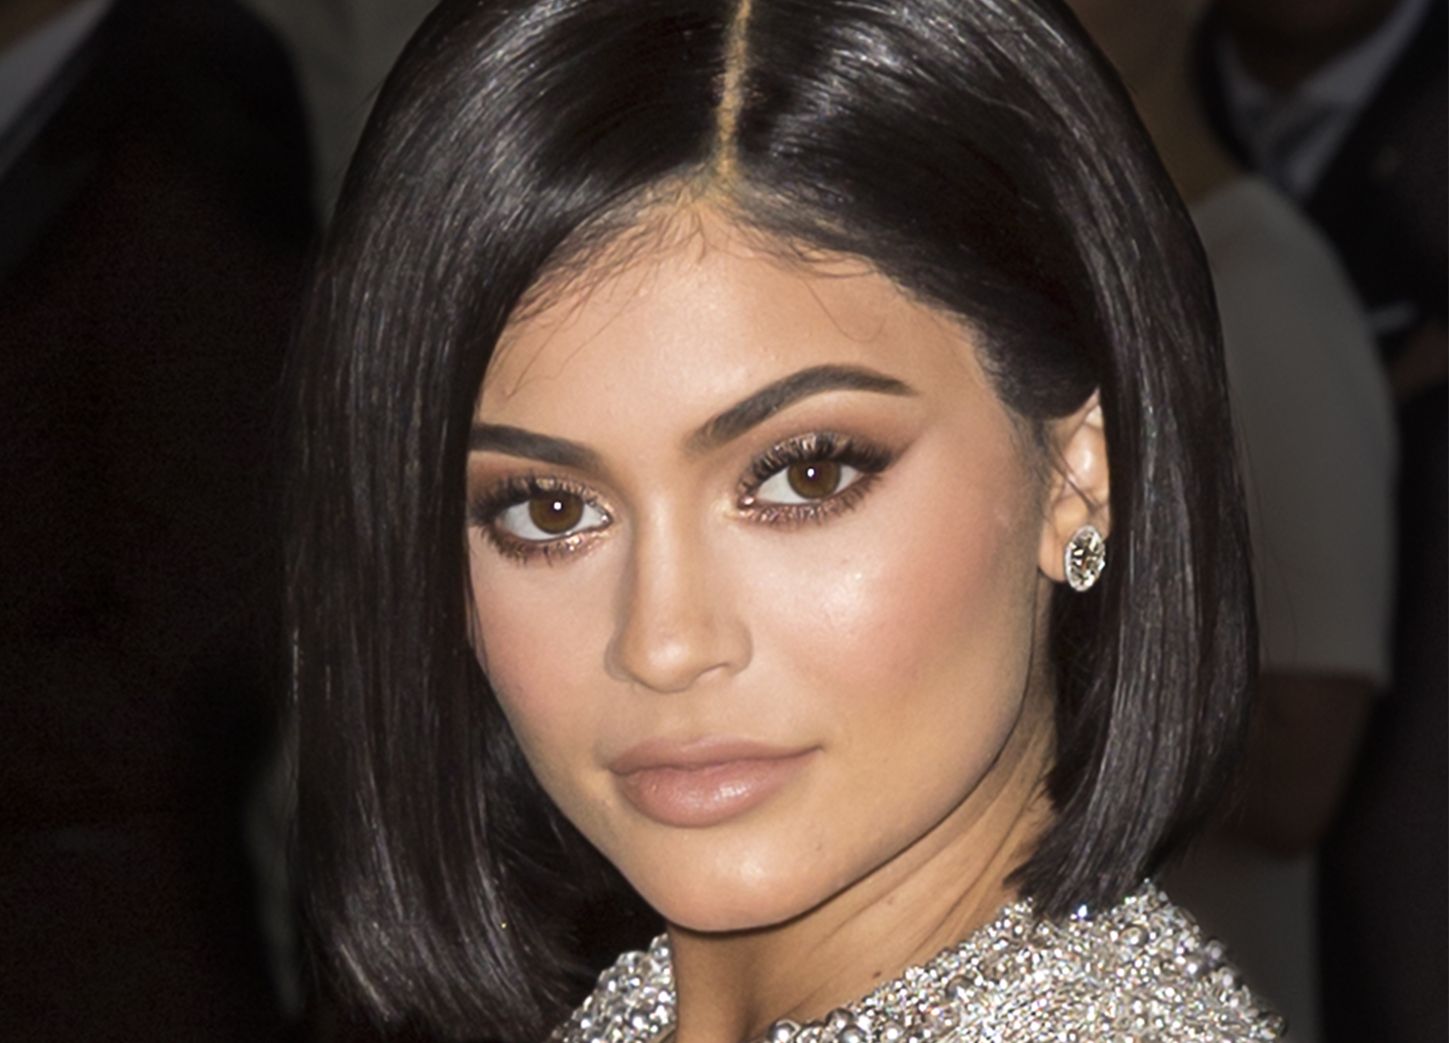 Is Kylie the new Kardashian boss?